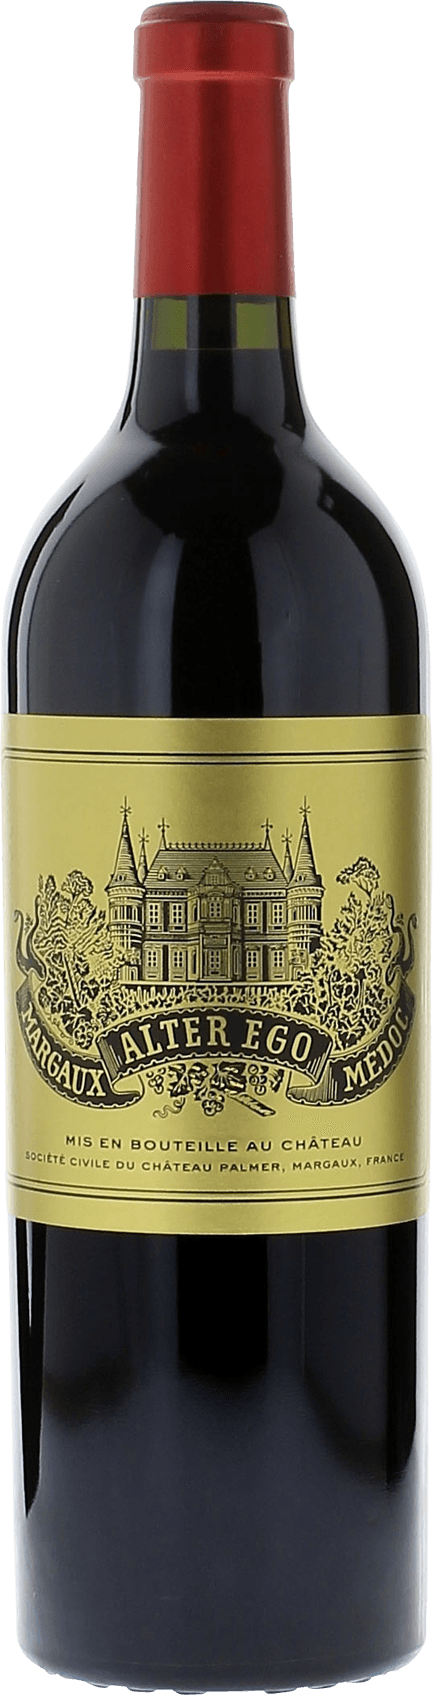 Alter ego 2015 2me Grand cru class Margaux, Bordeaux rouge